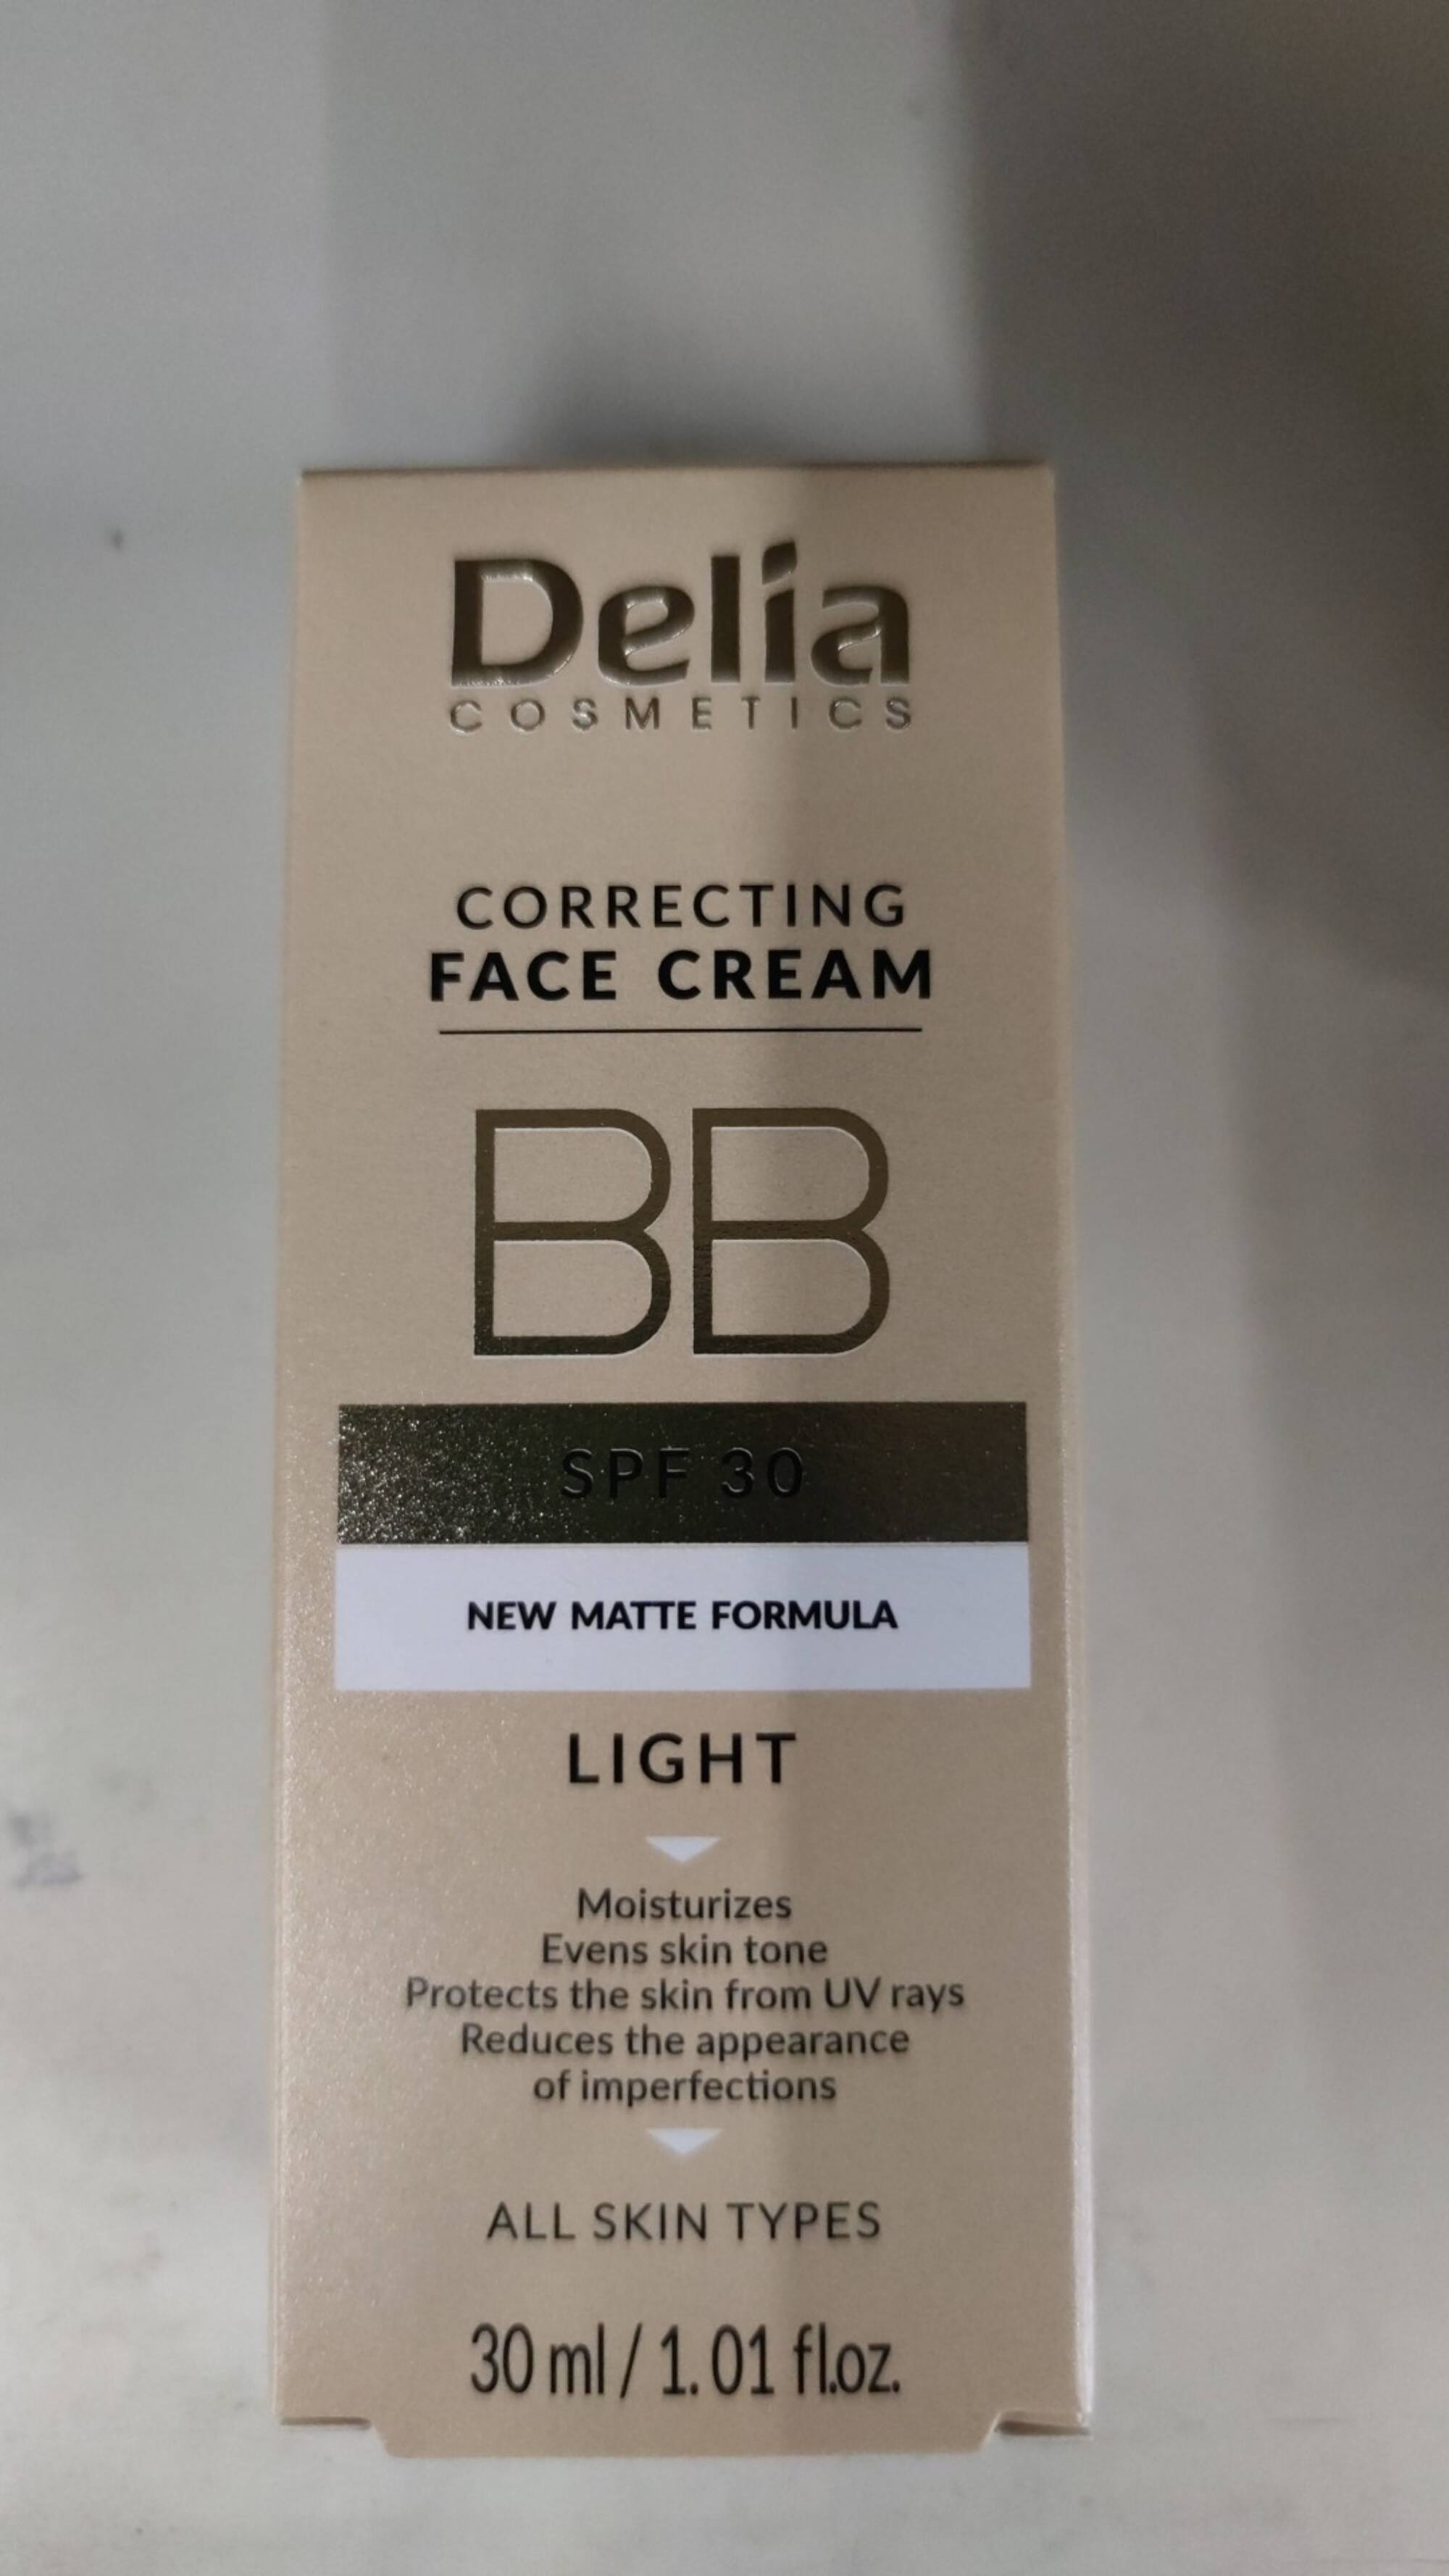 DELIA COSMETICS - Correcting face cream BB light